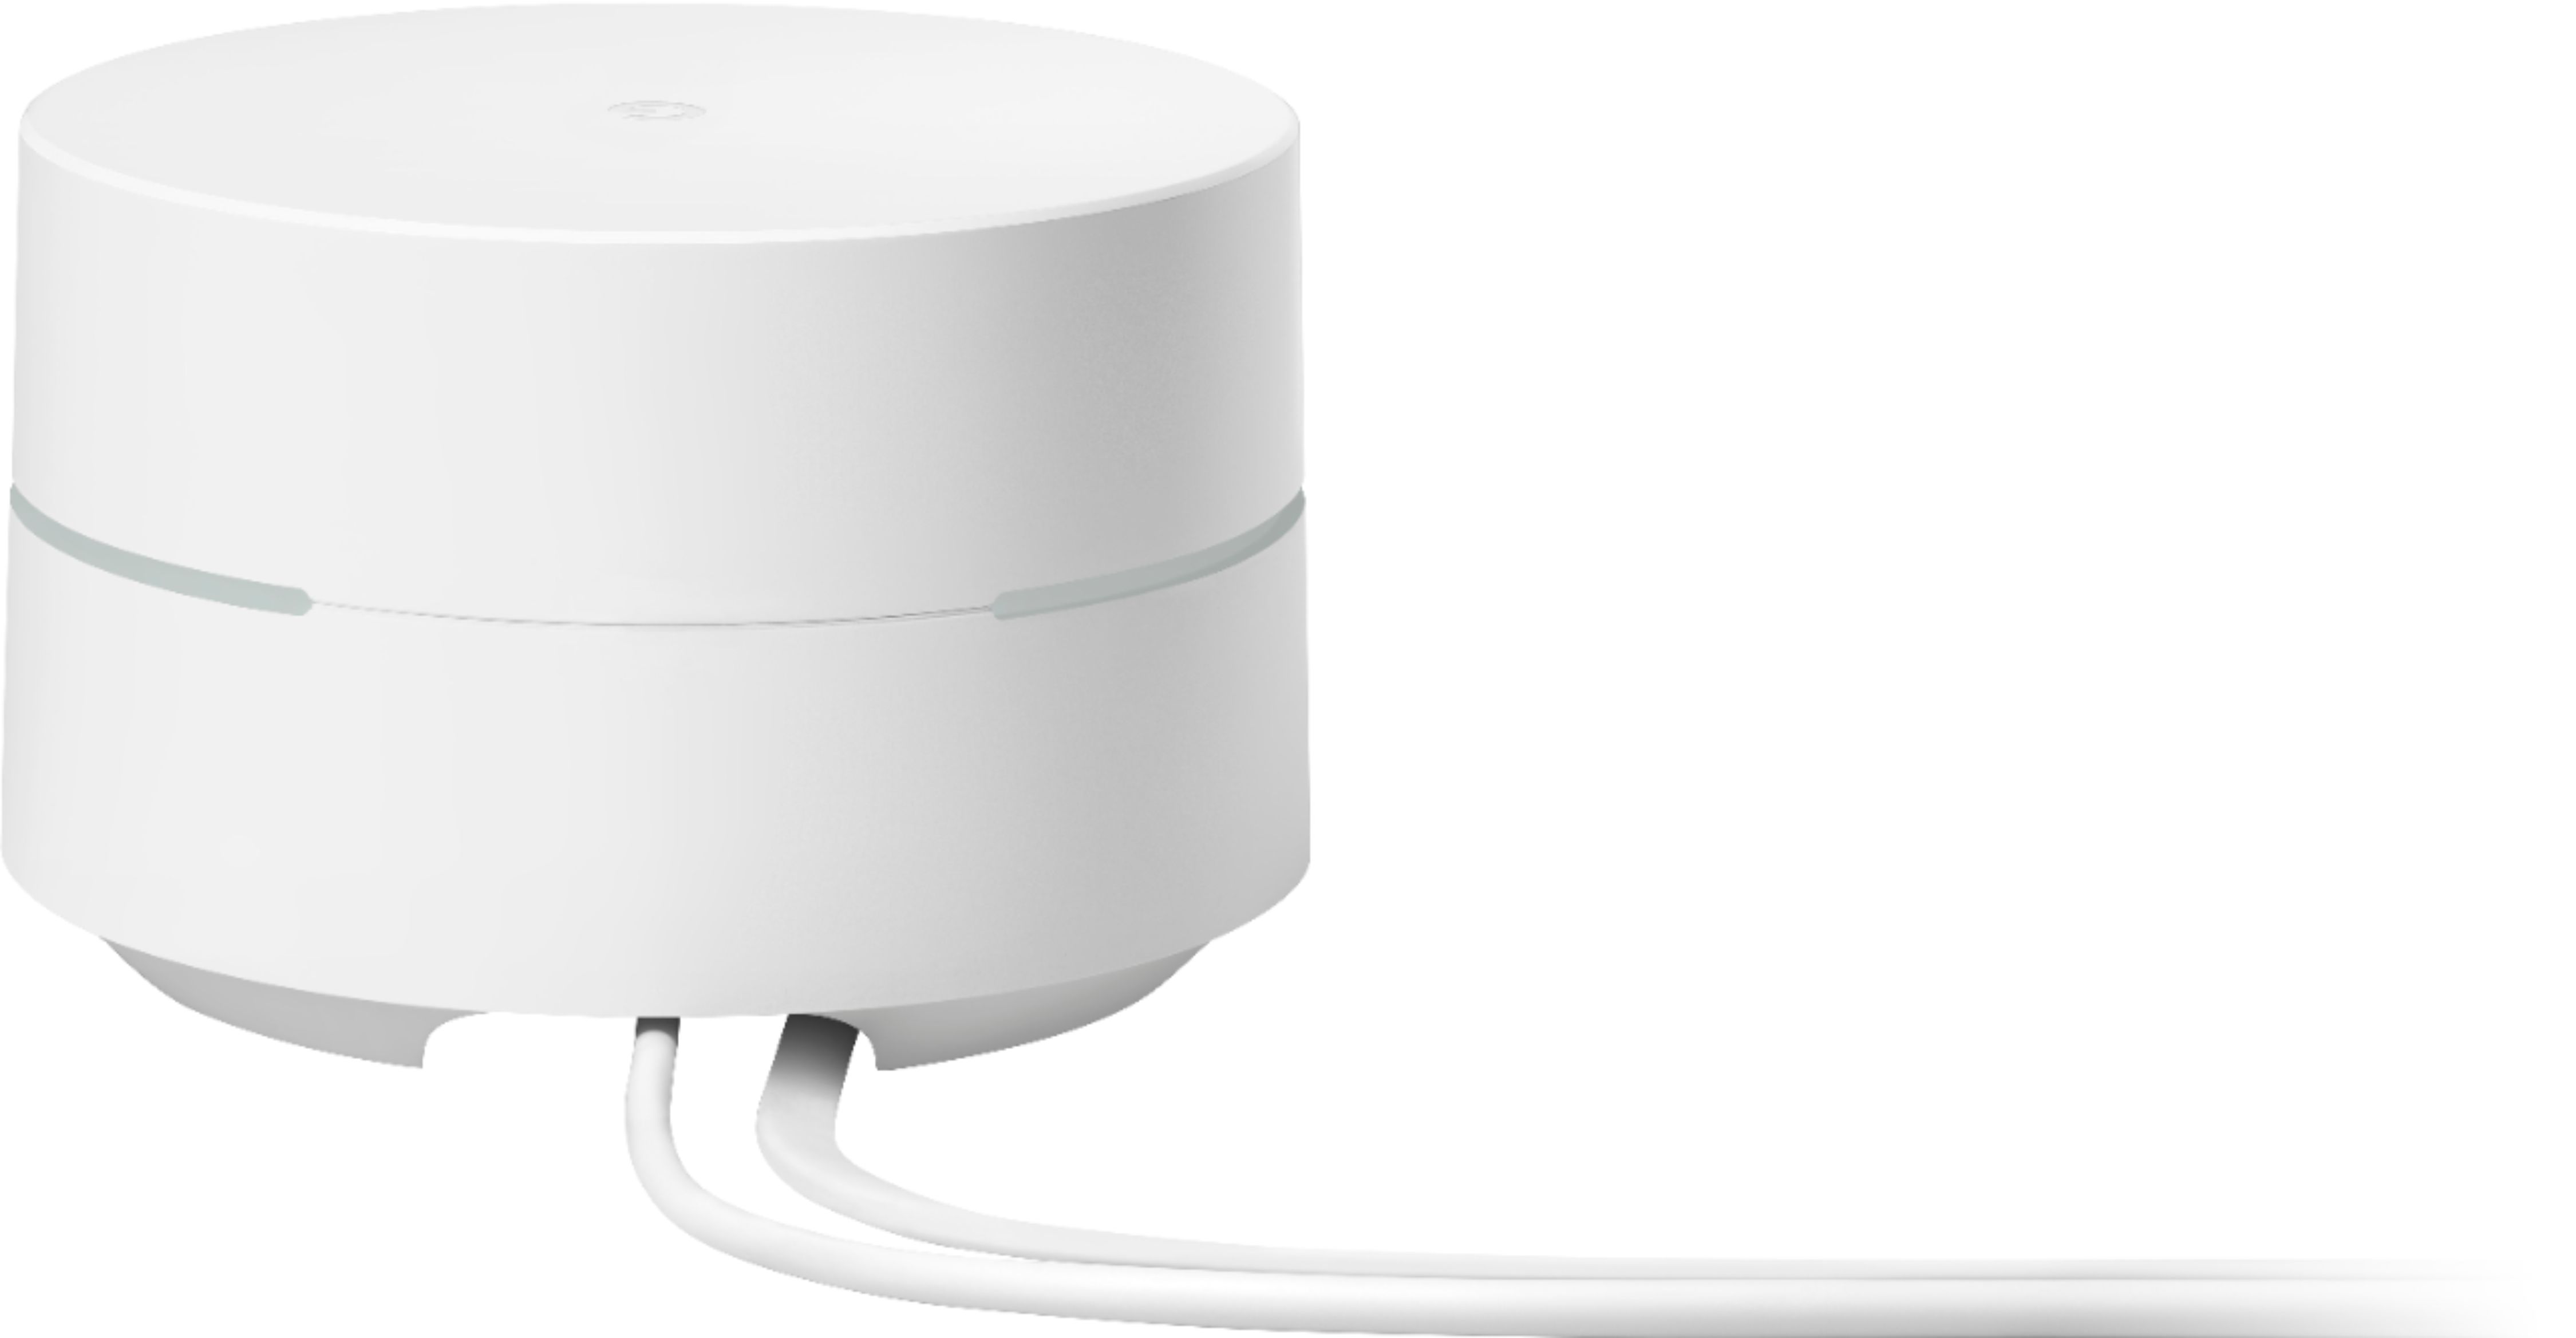 Google Wifi Mesh Router (AC1200) 1 pack GA02430-US - Buy